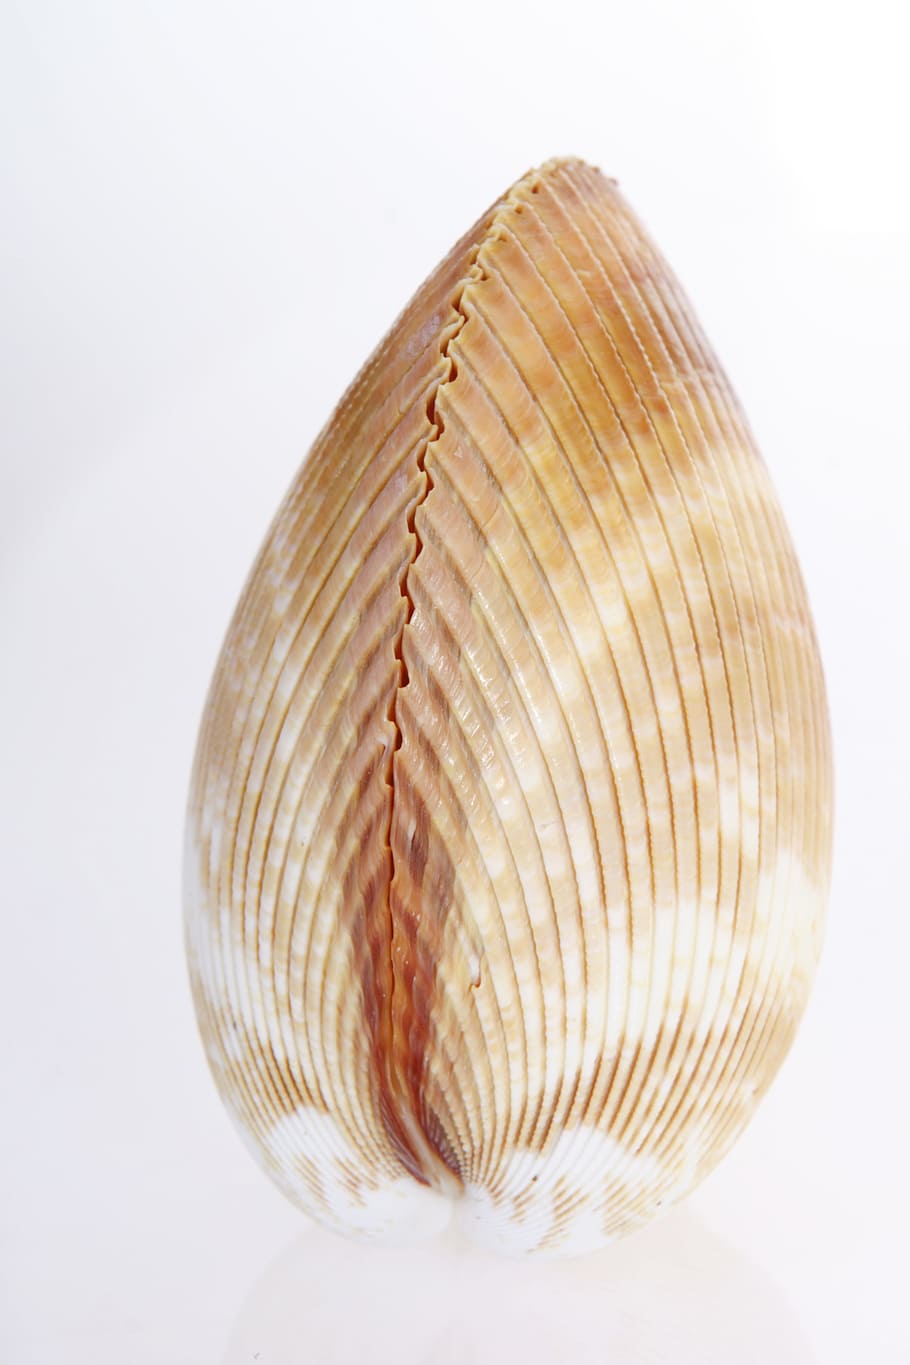 bone, close-up, closeup, coast, coastline, cockle-shell, conch